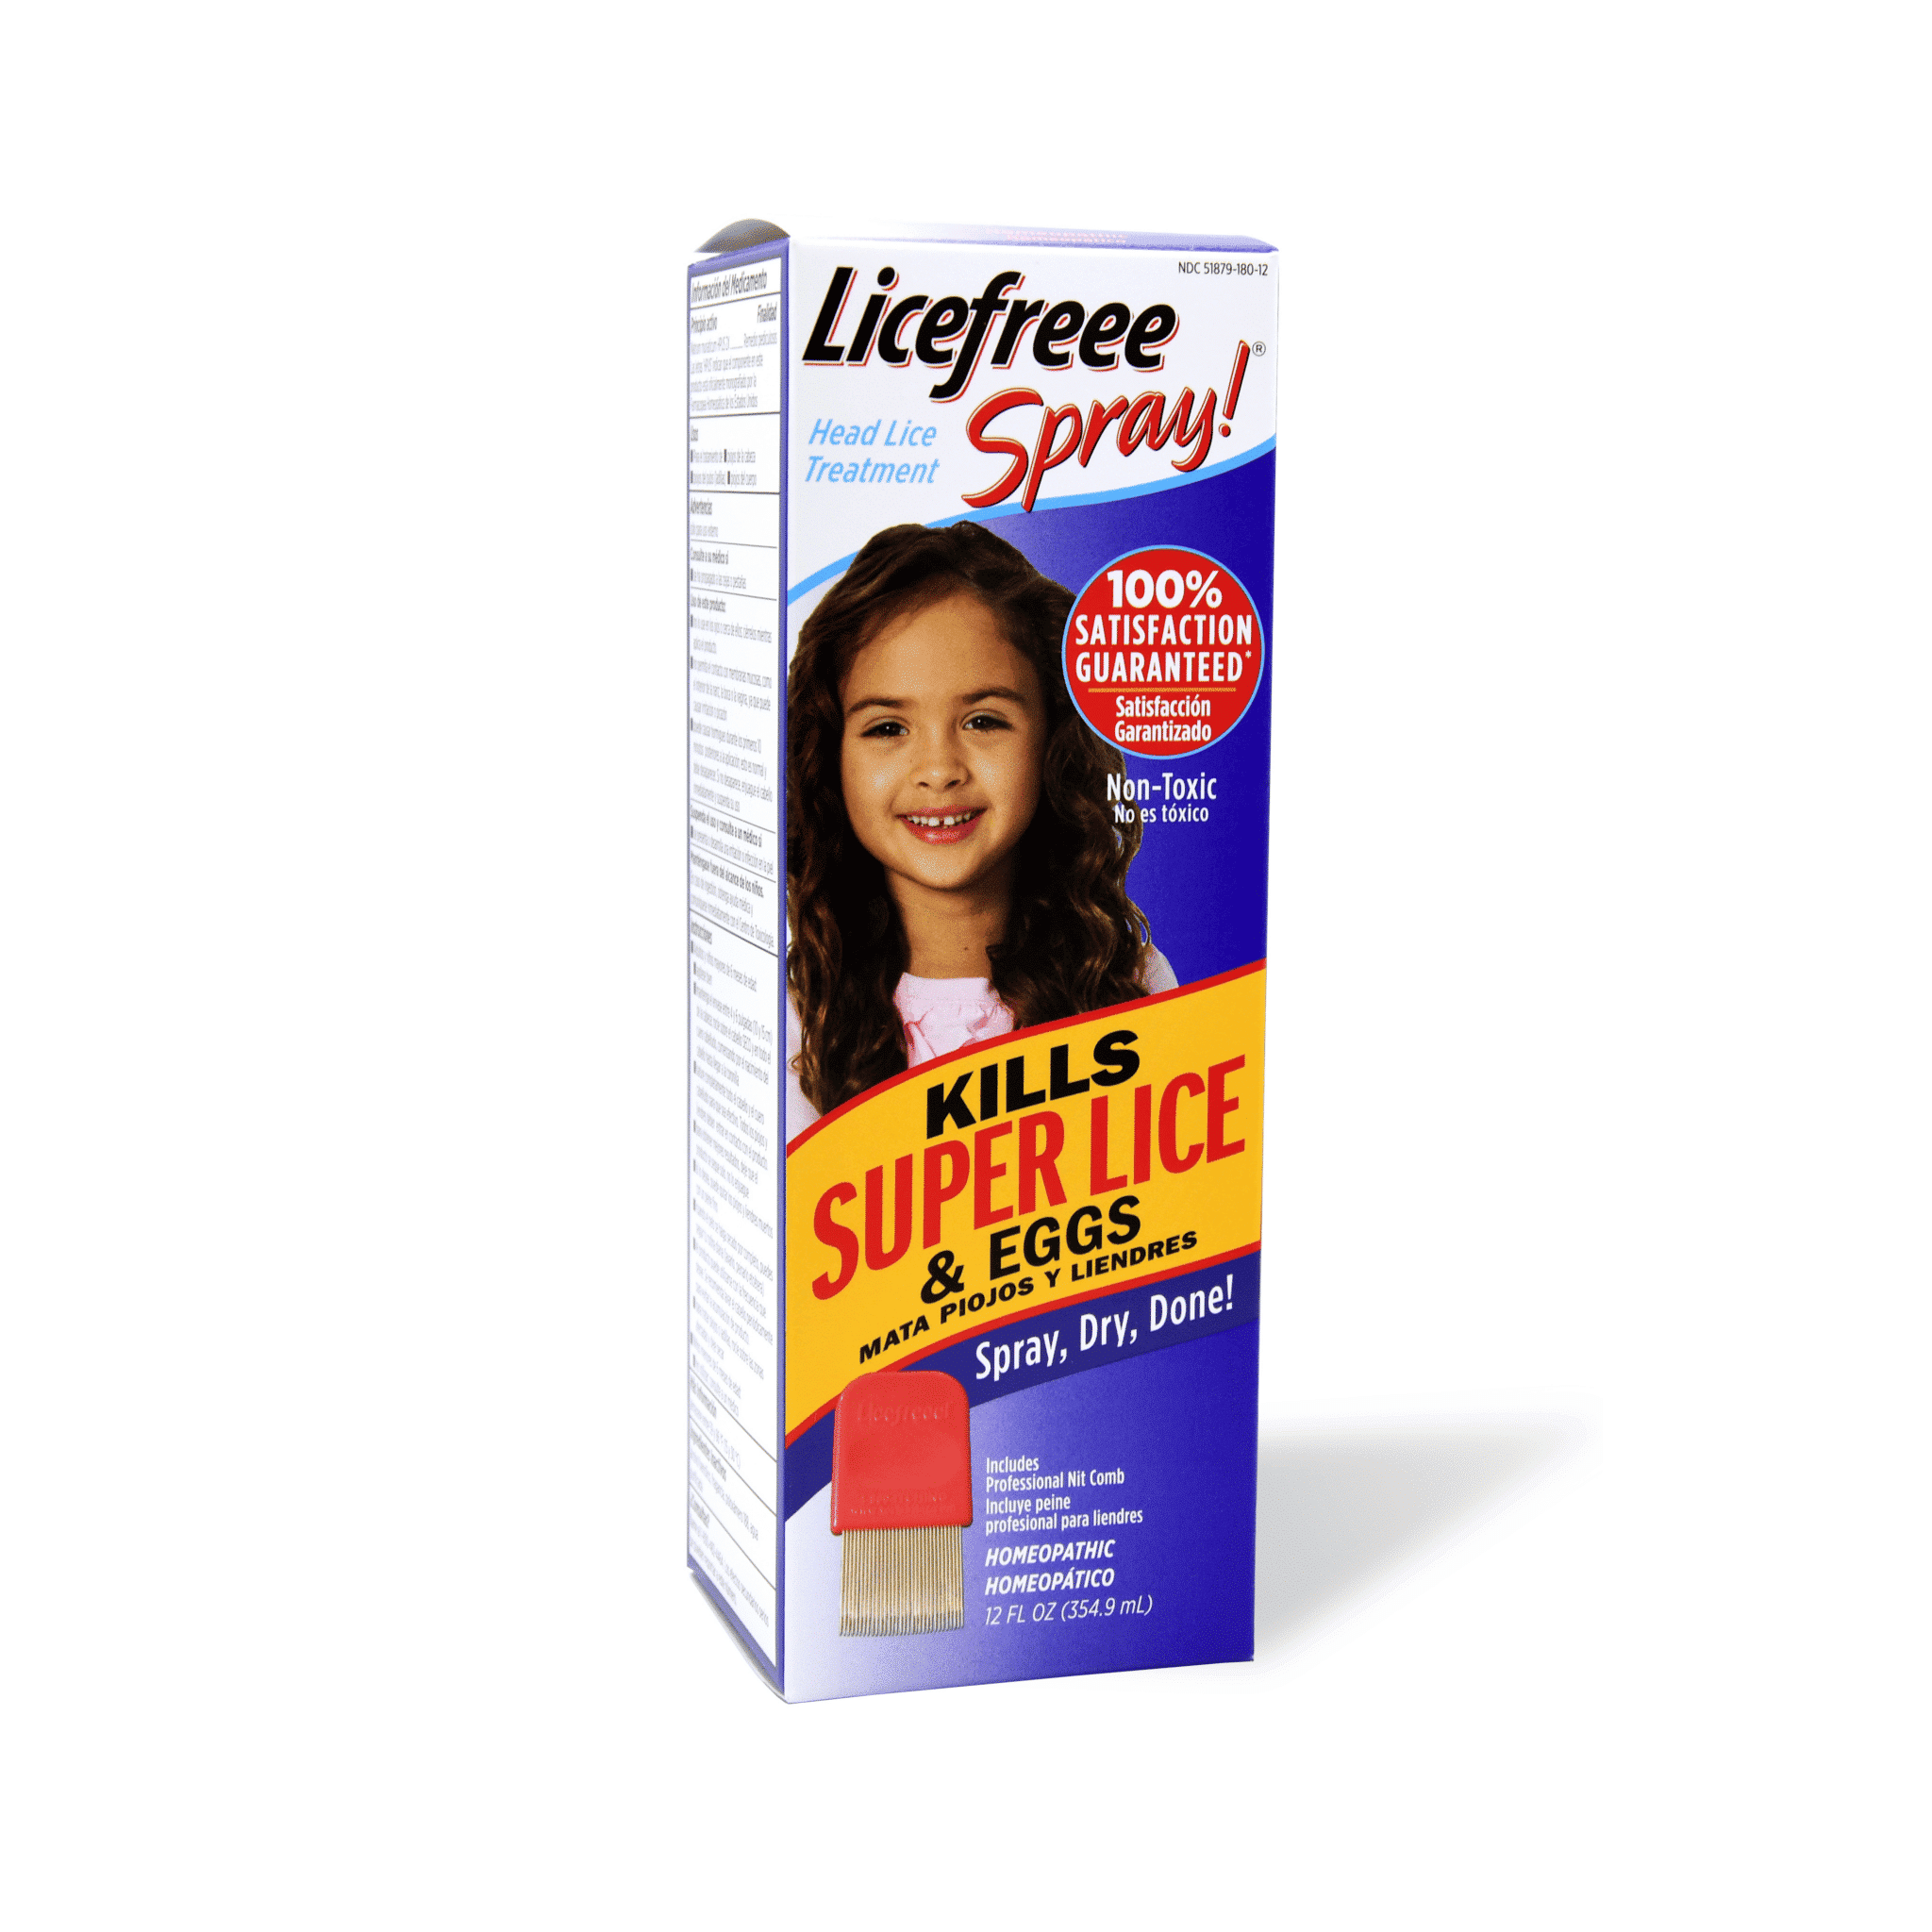 Licefreee Spray! Lice Killing Spray | Licefreee!